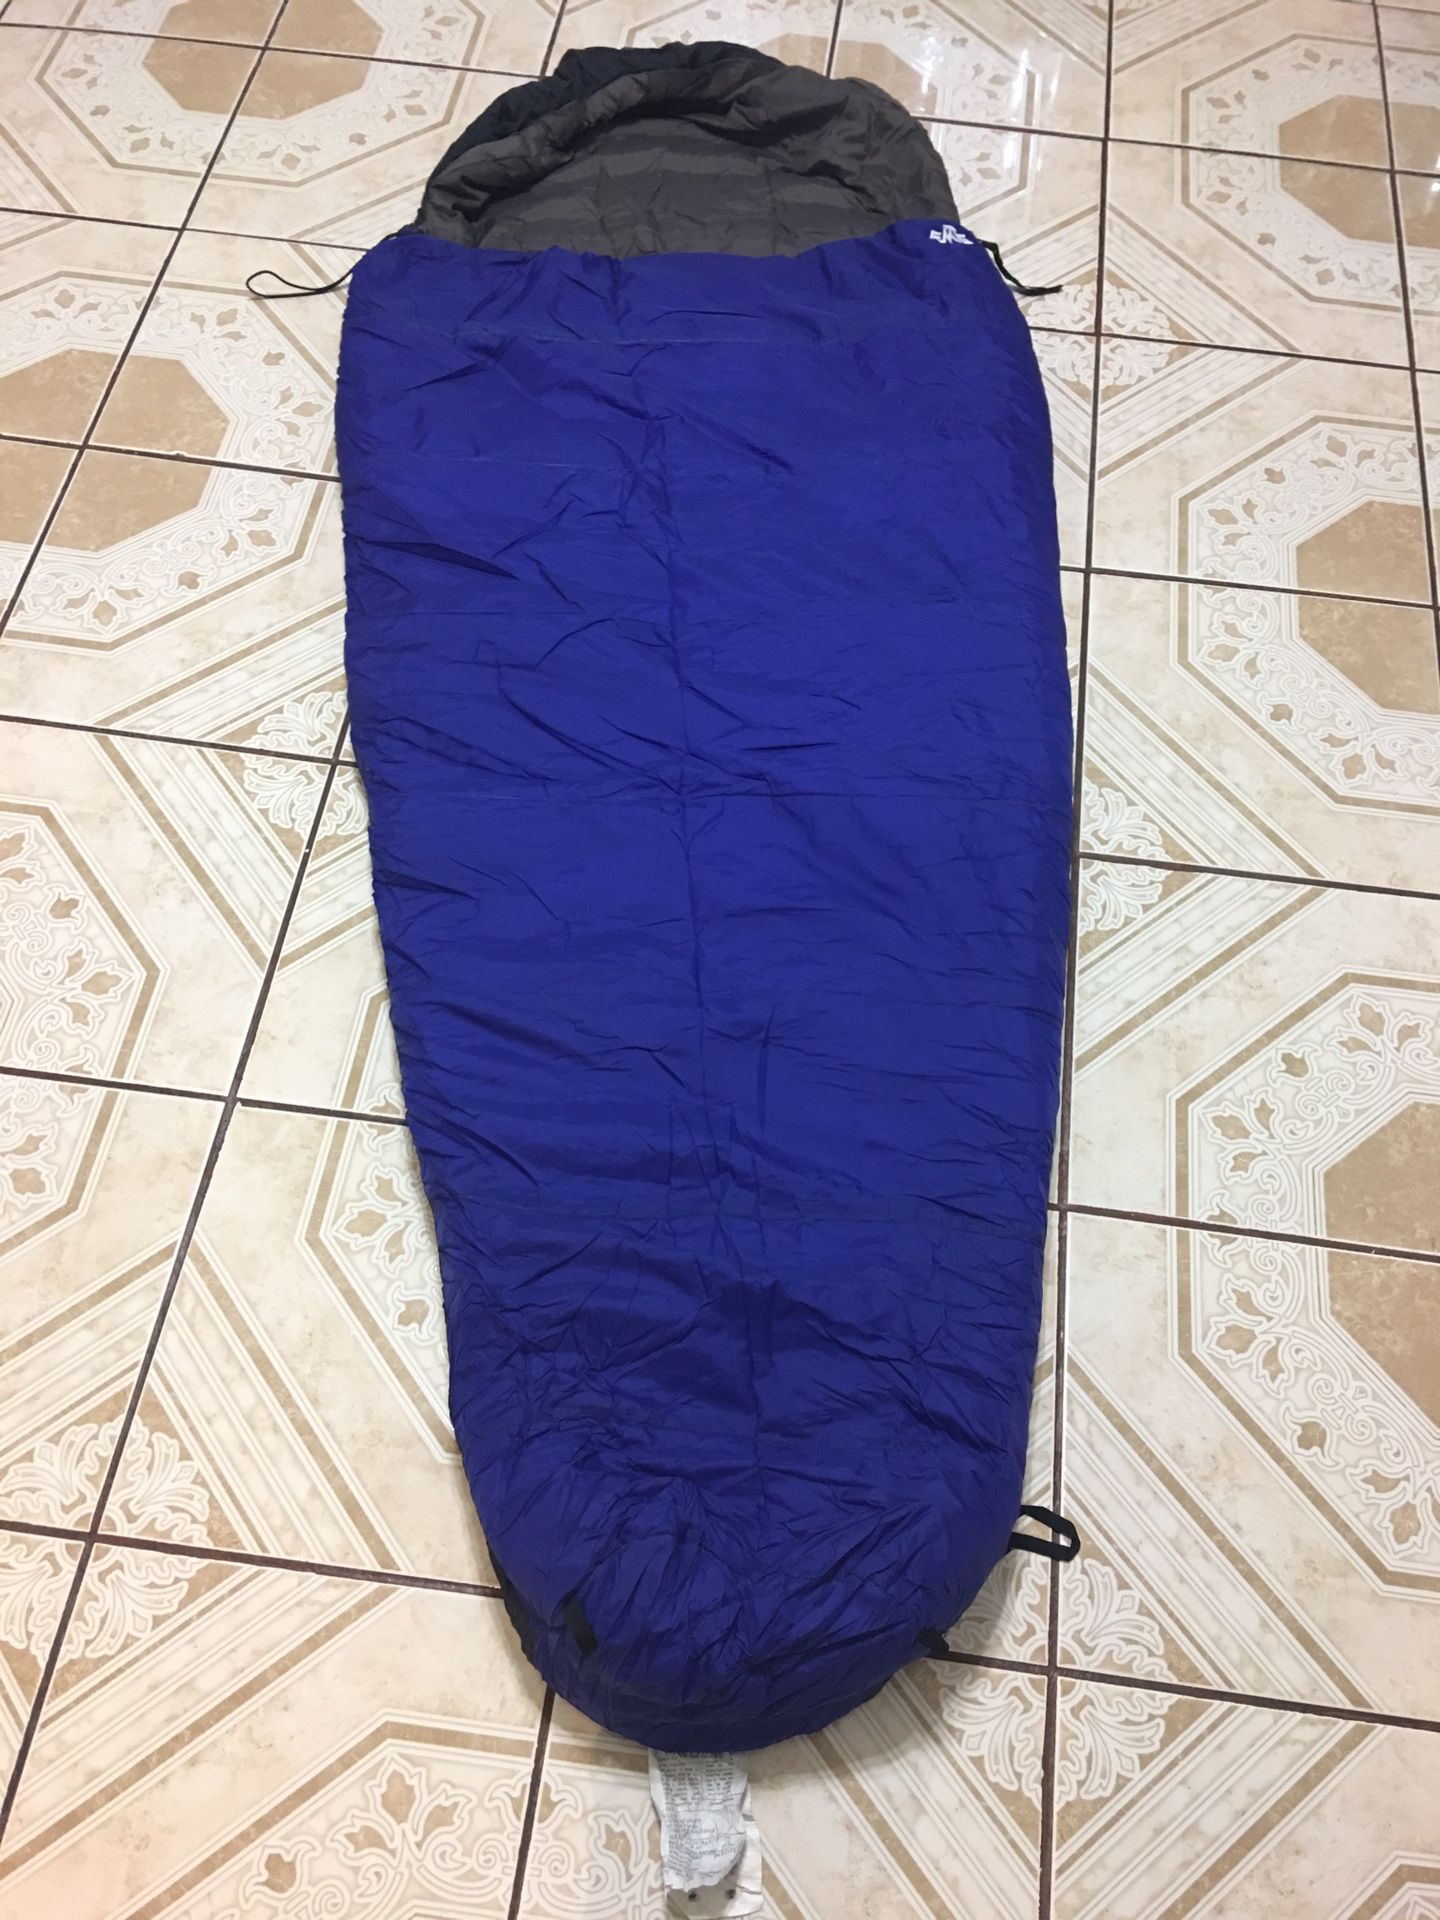 Timberline 25 sleeping bag with backpack